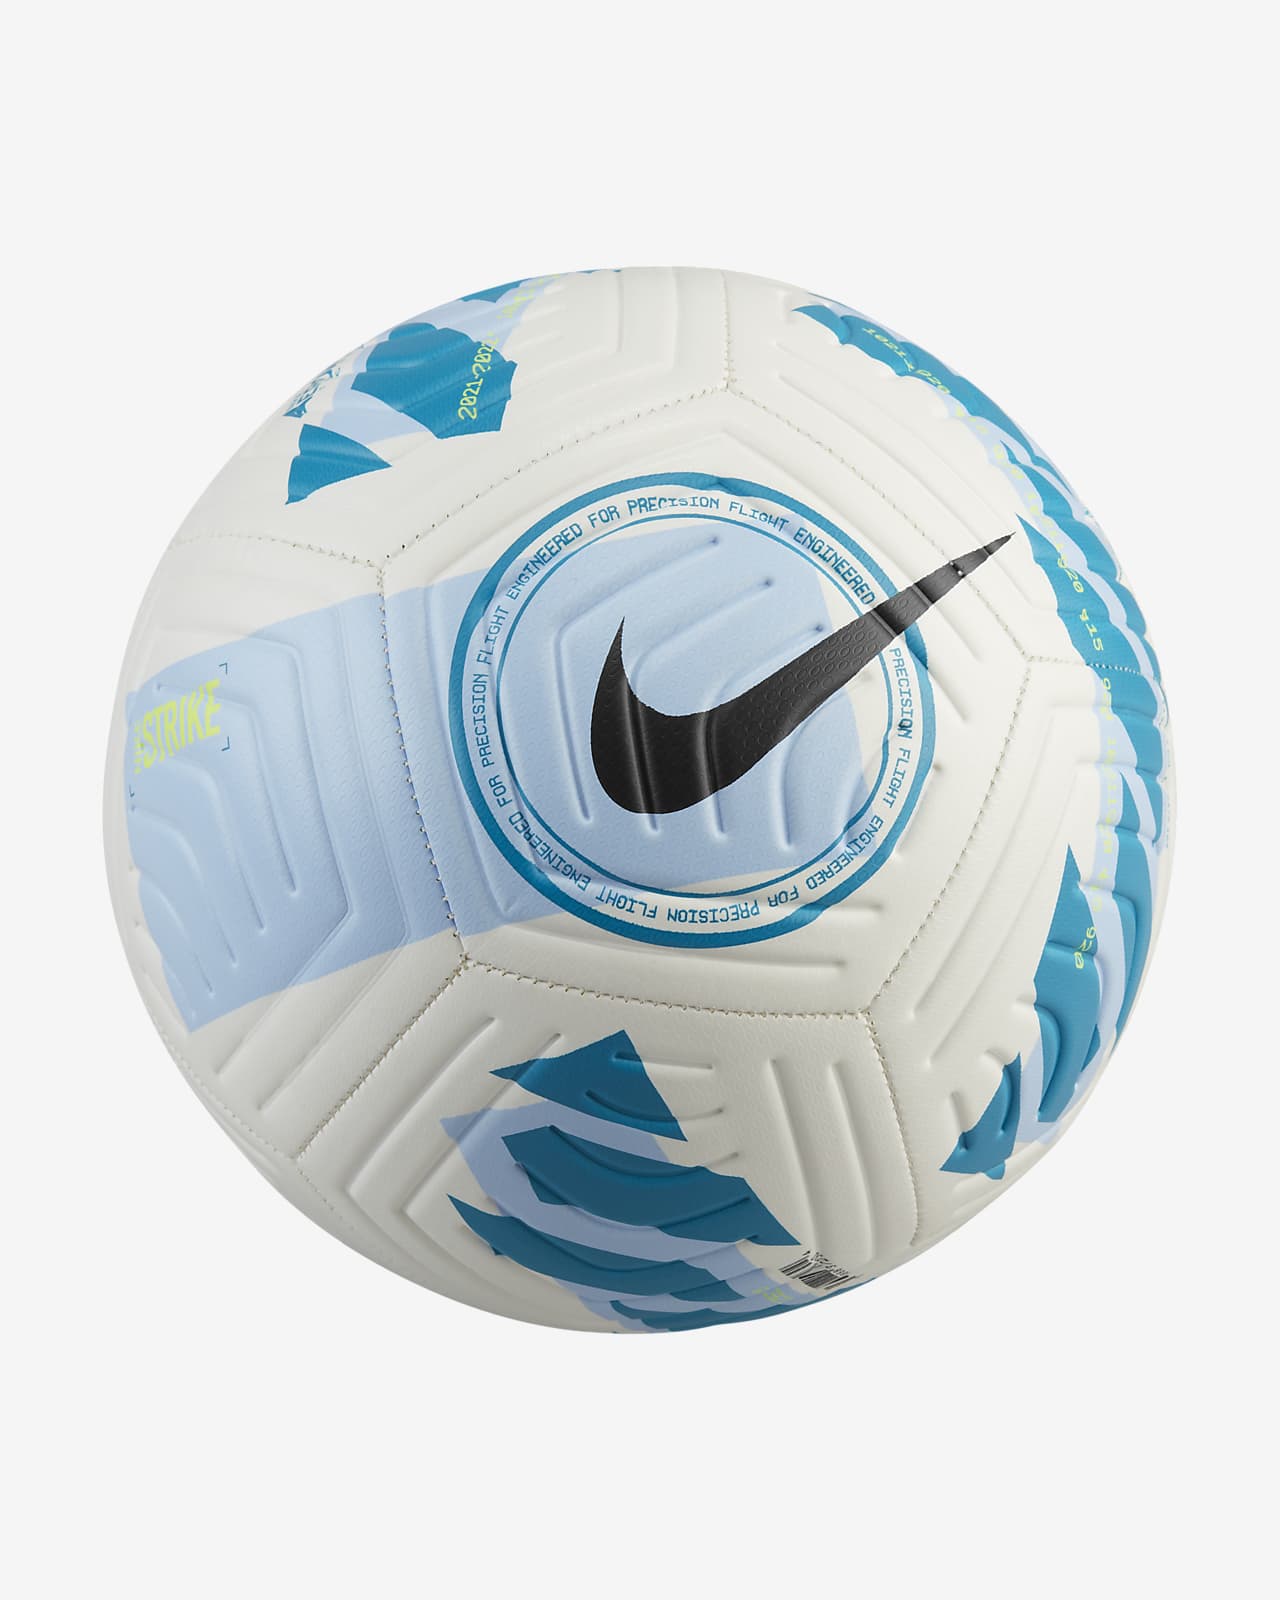 Balón de fútbol Nike Strike